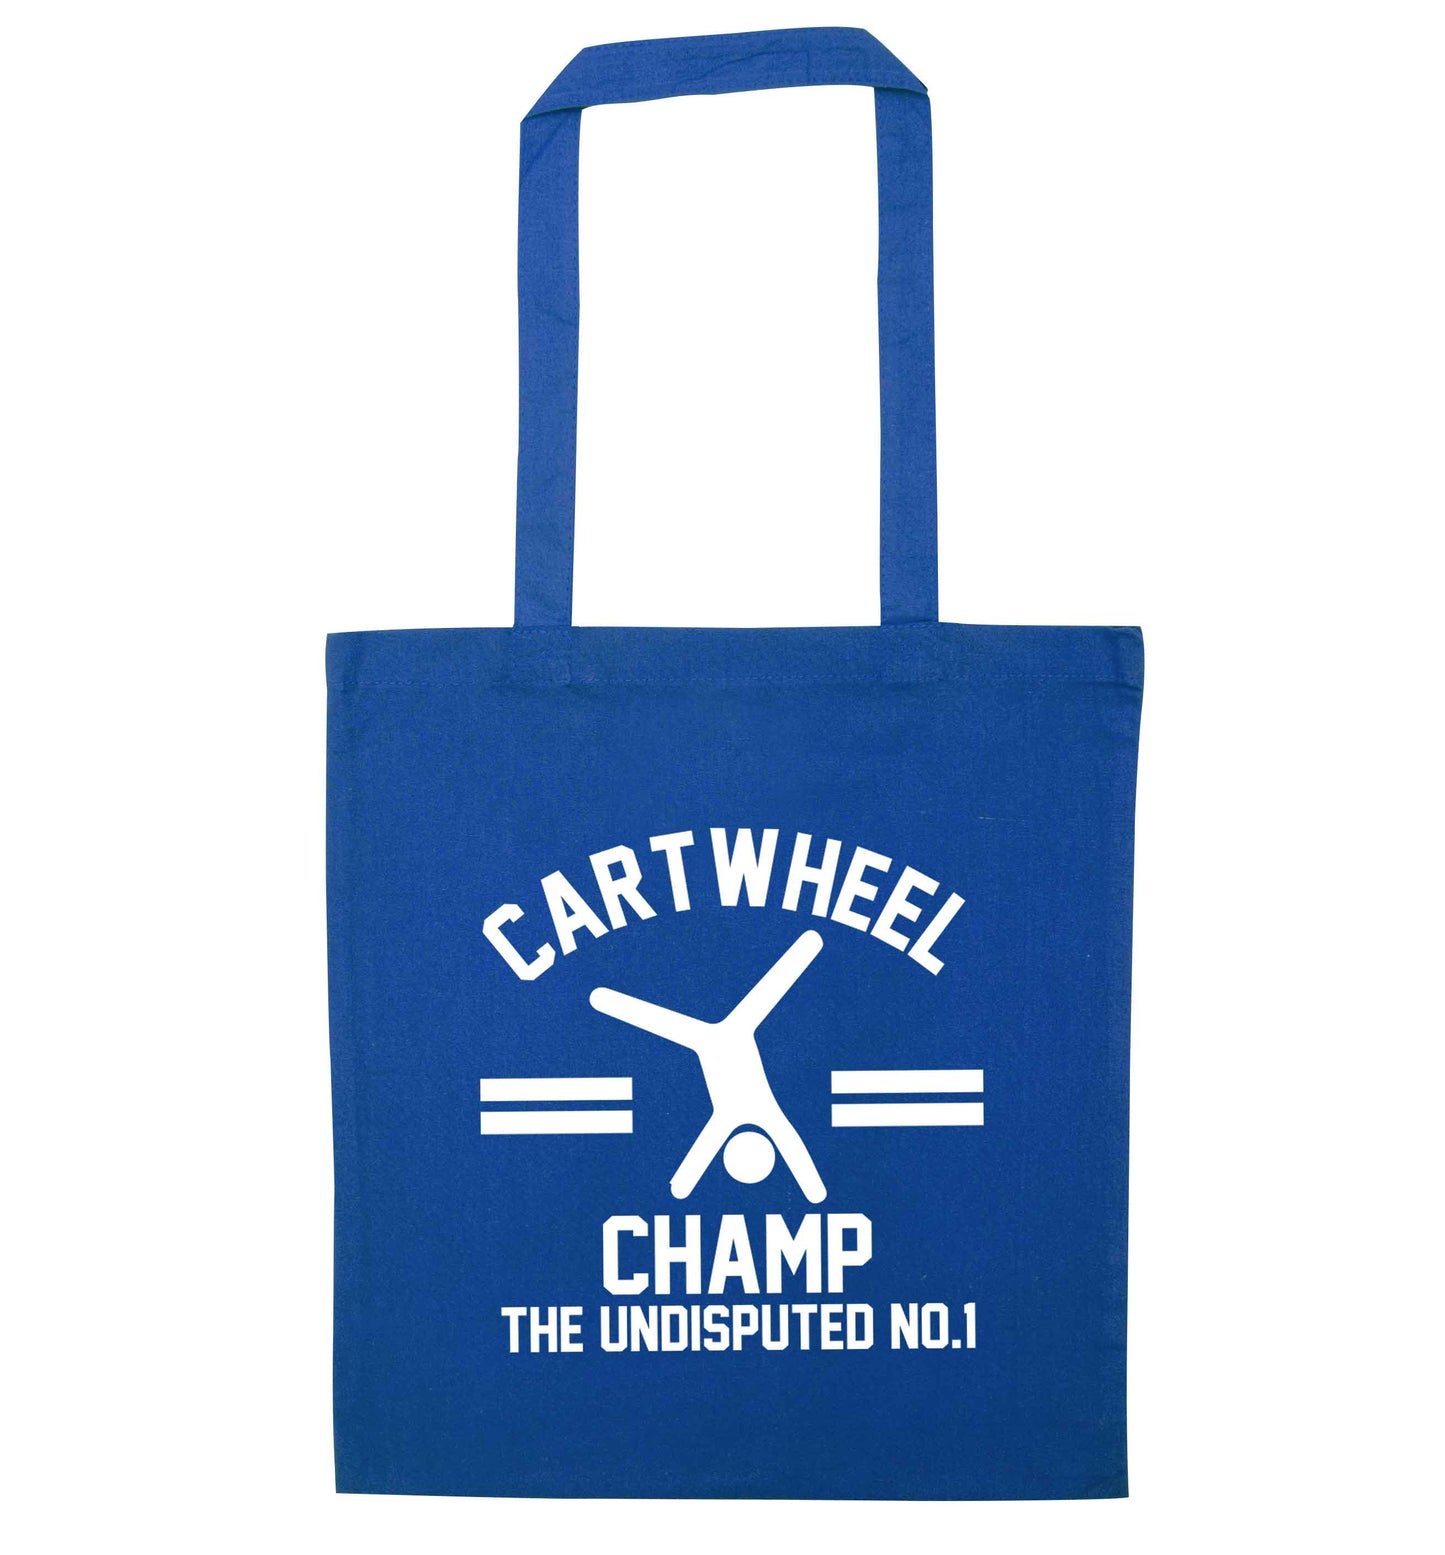 Undisputed cartwheel championship no.1  blue tote bag